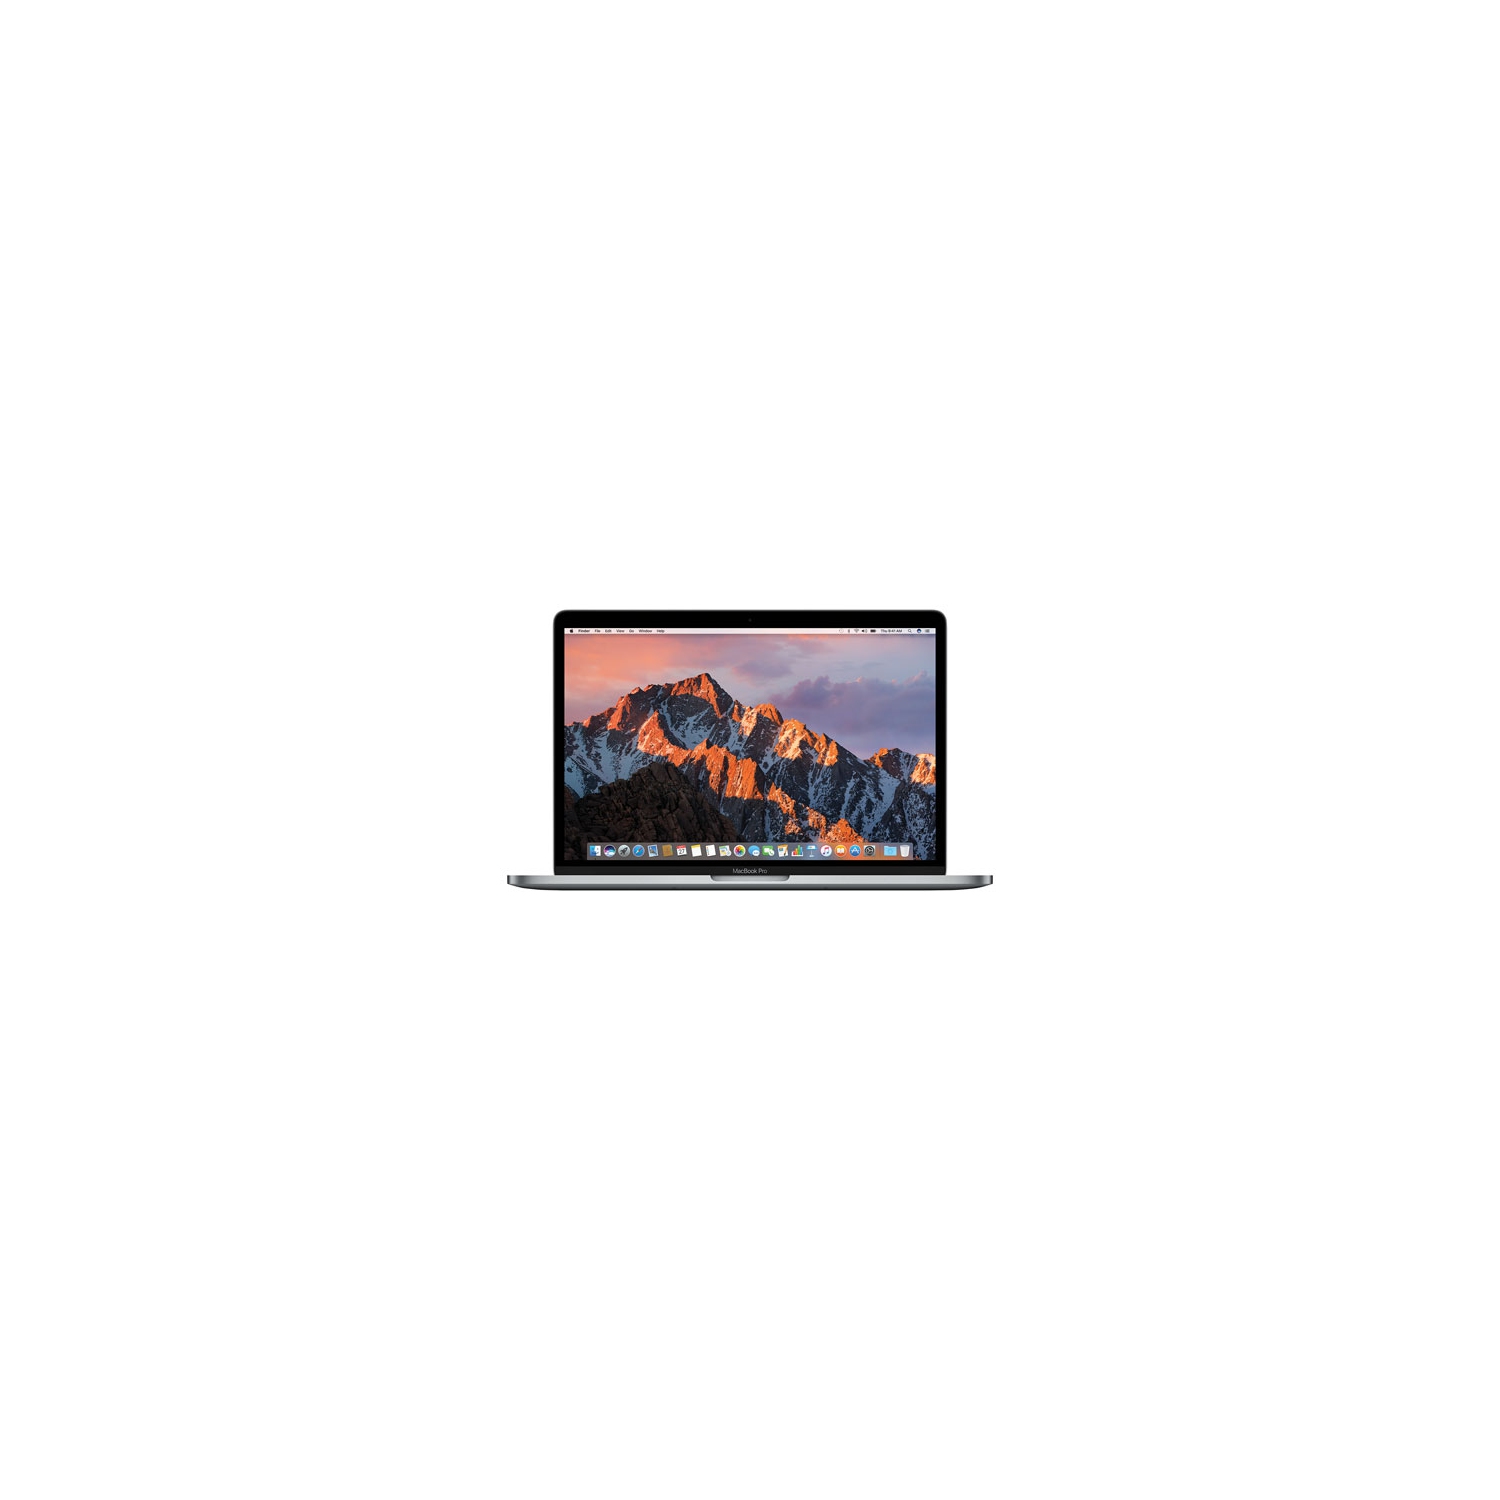 Refurbished (Good) - Apple MacBook Pro 13.3" Laptop (Intel Core i5 2GHz/256GB SSD/8GB RAM) - Space Grey - EN (2016 Model)